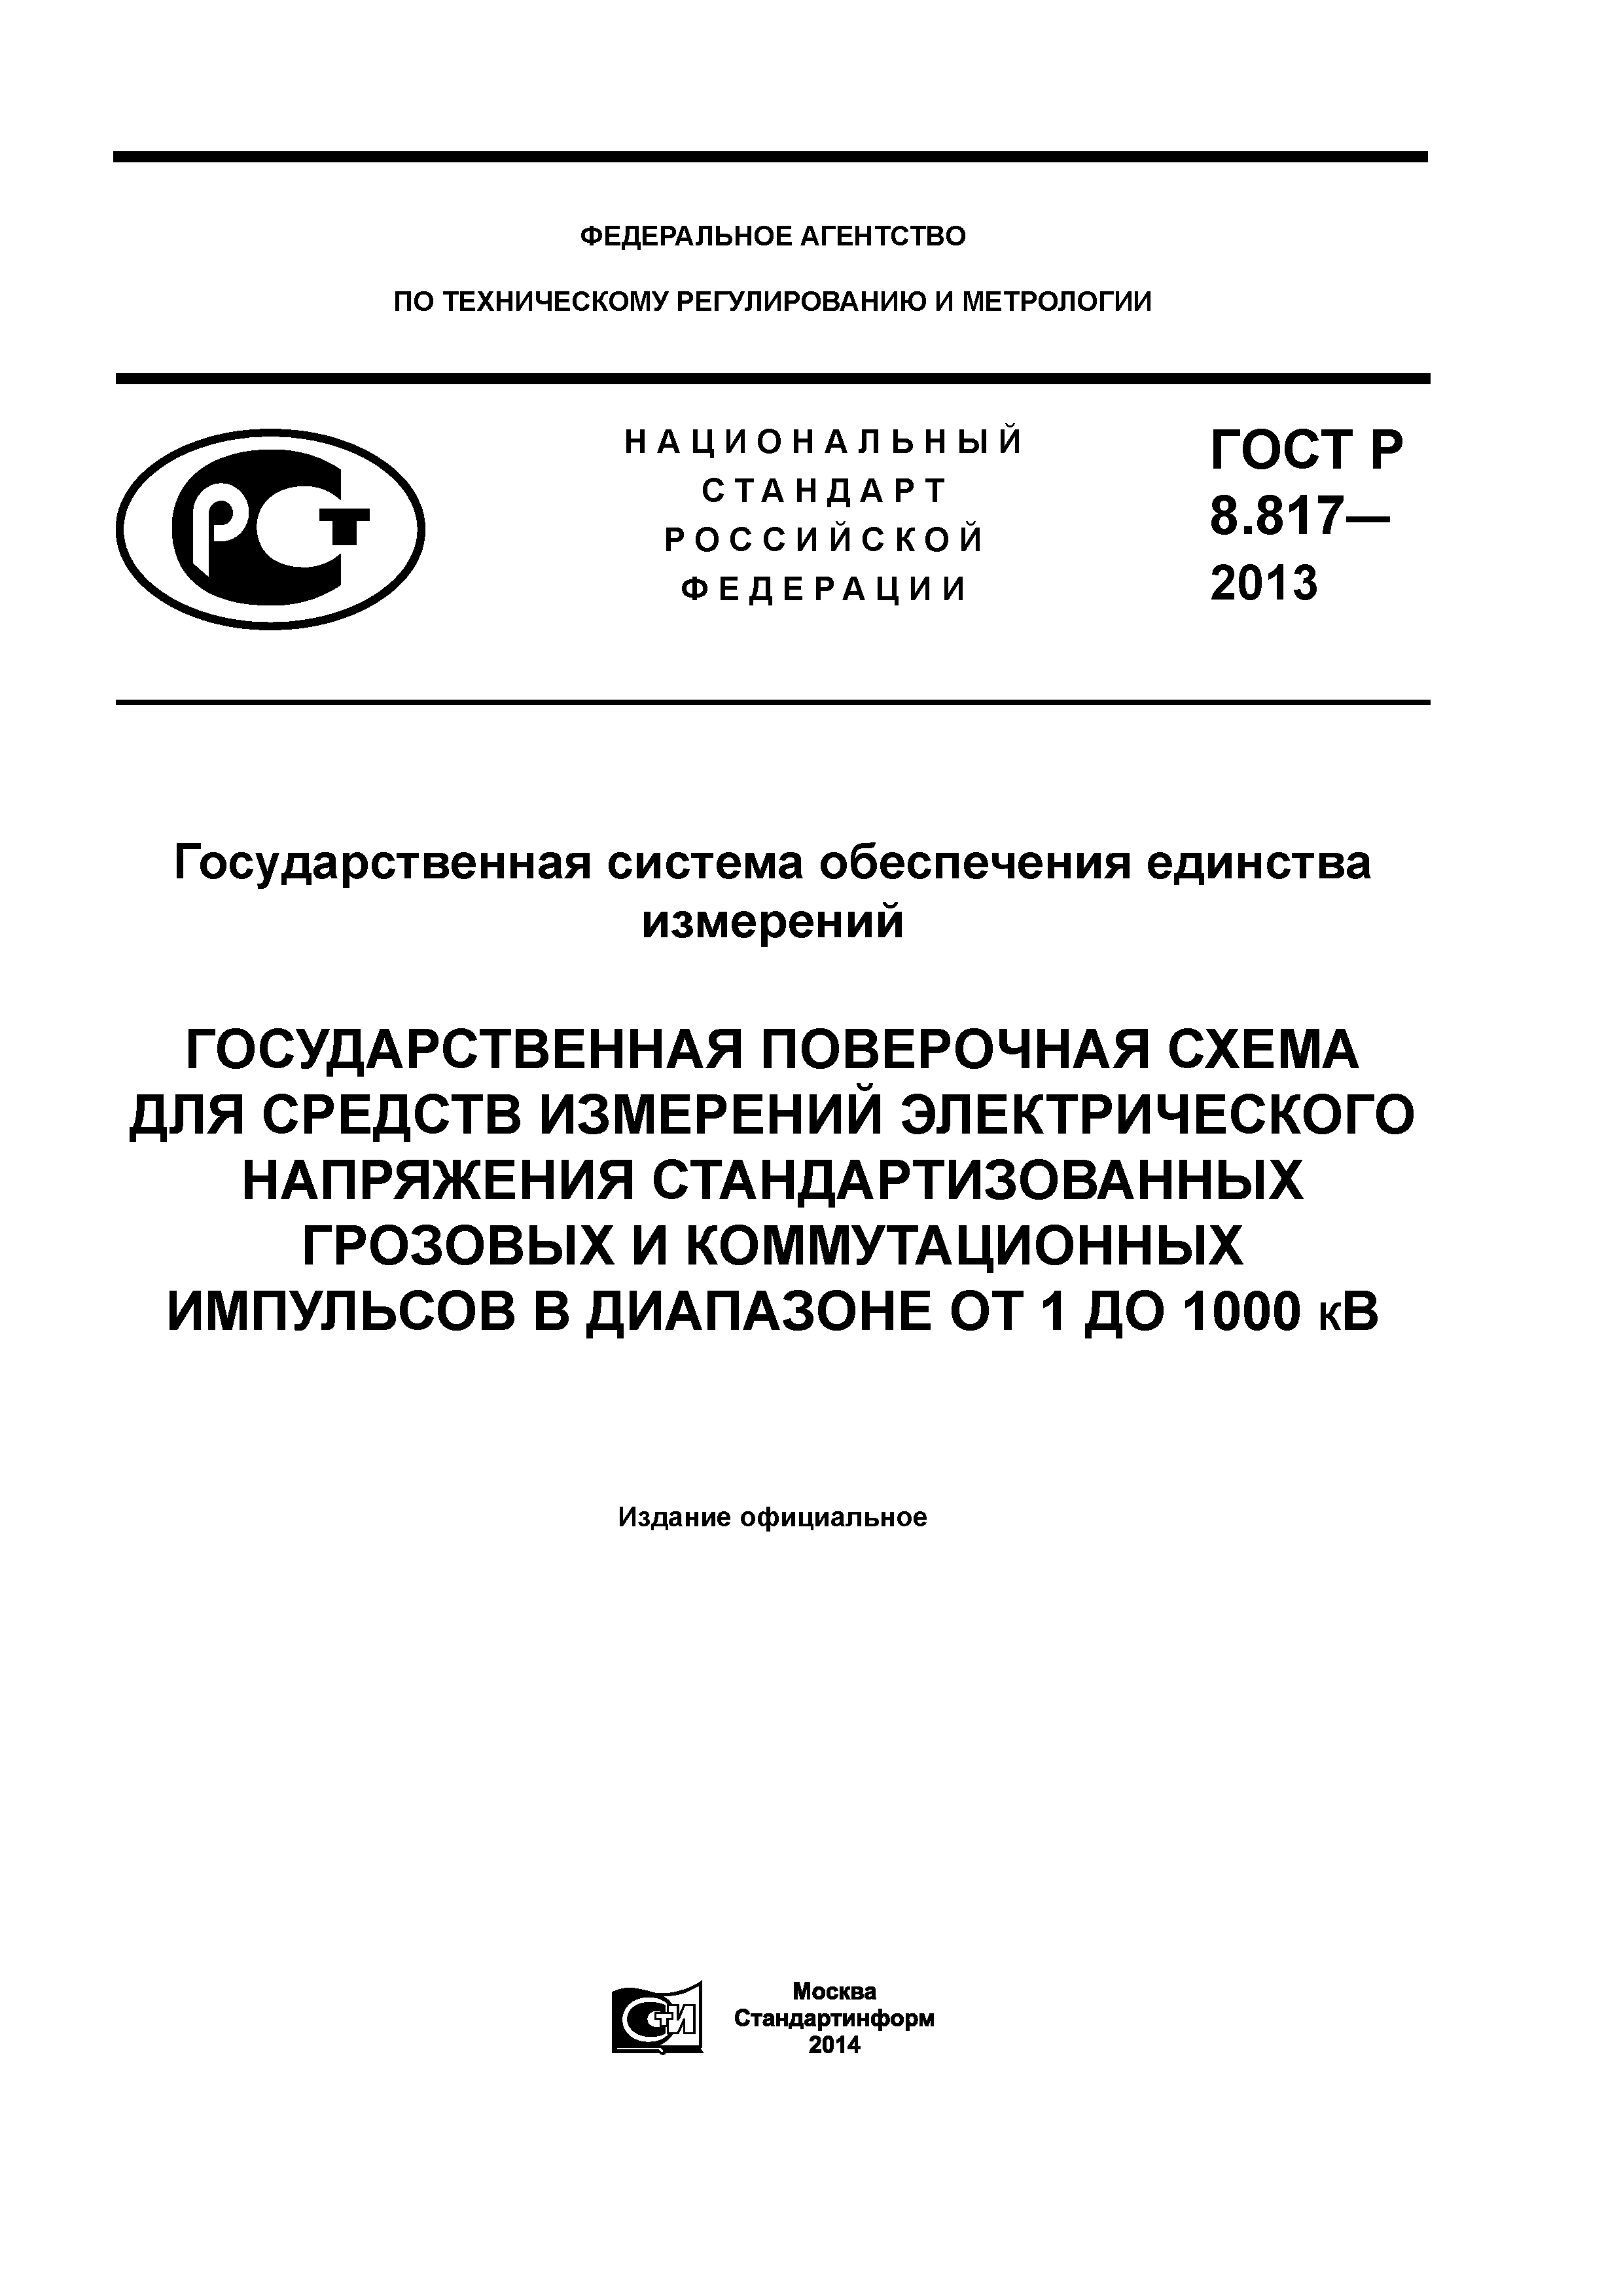 ГОСТ Р 8.817-2013